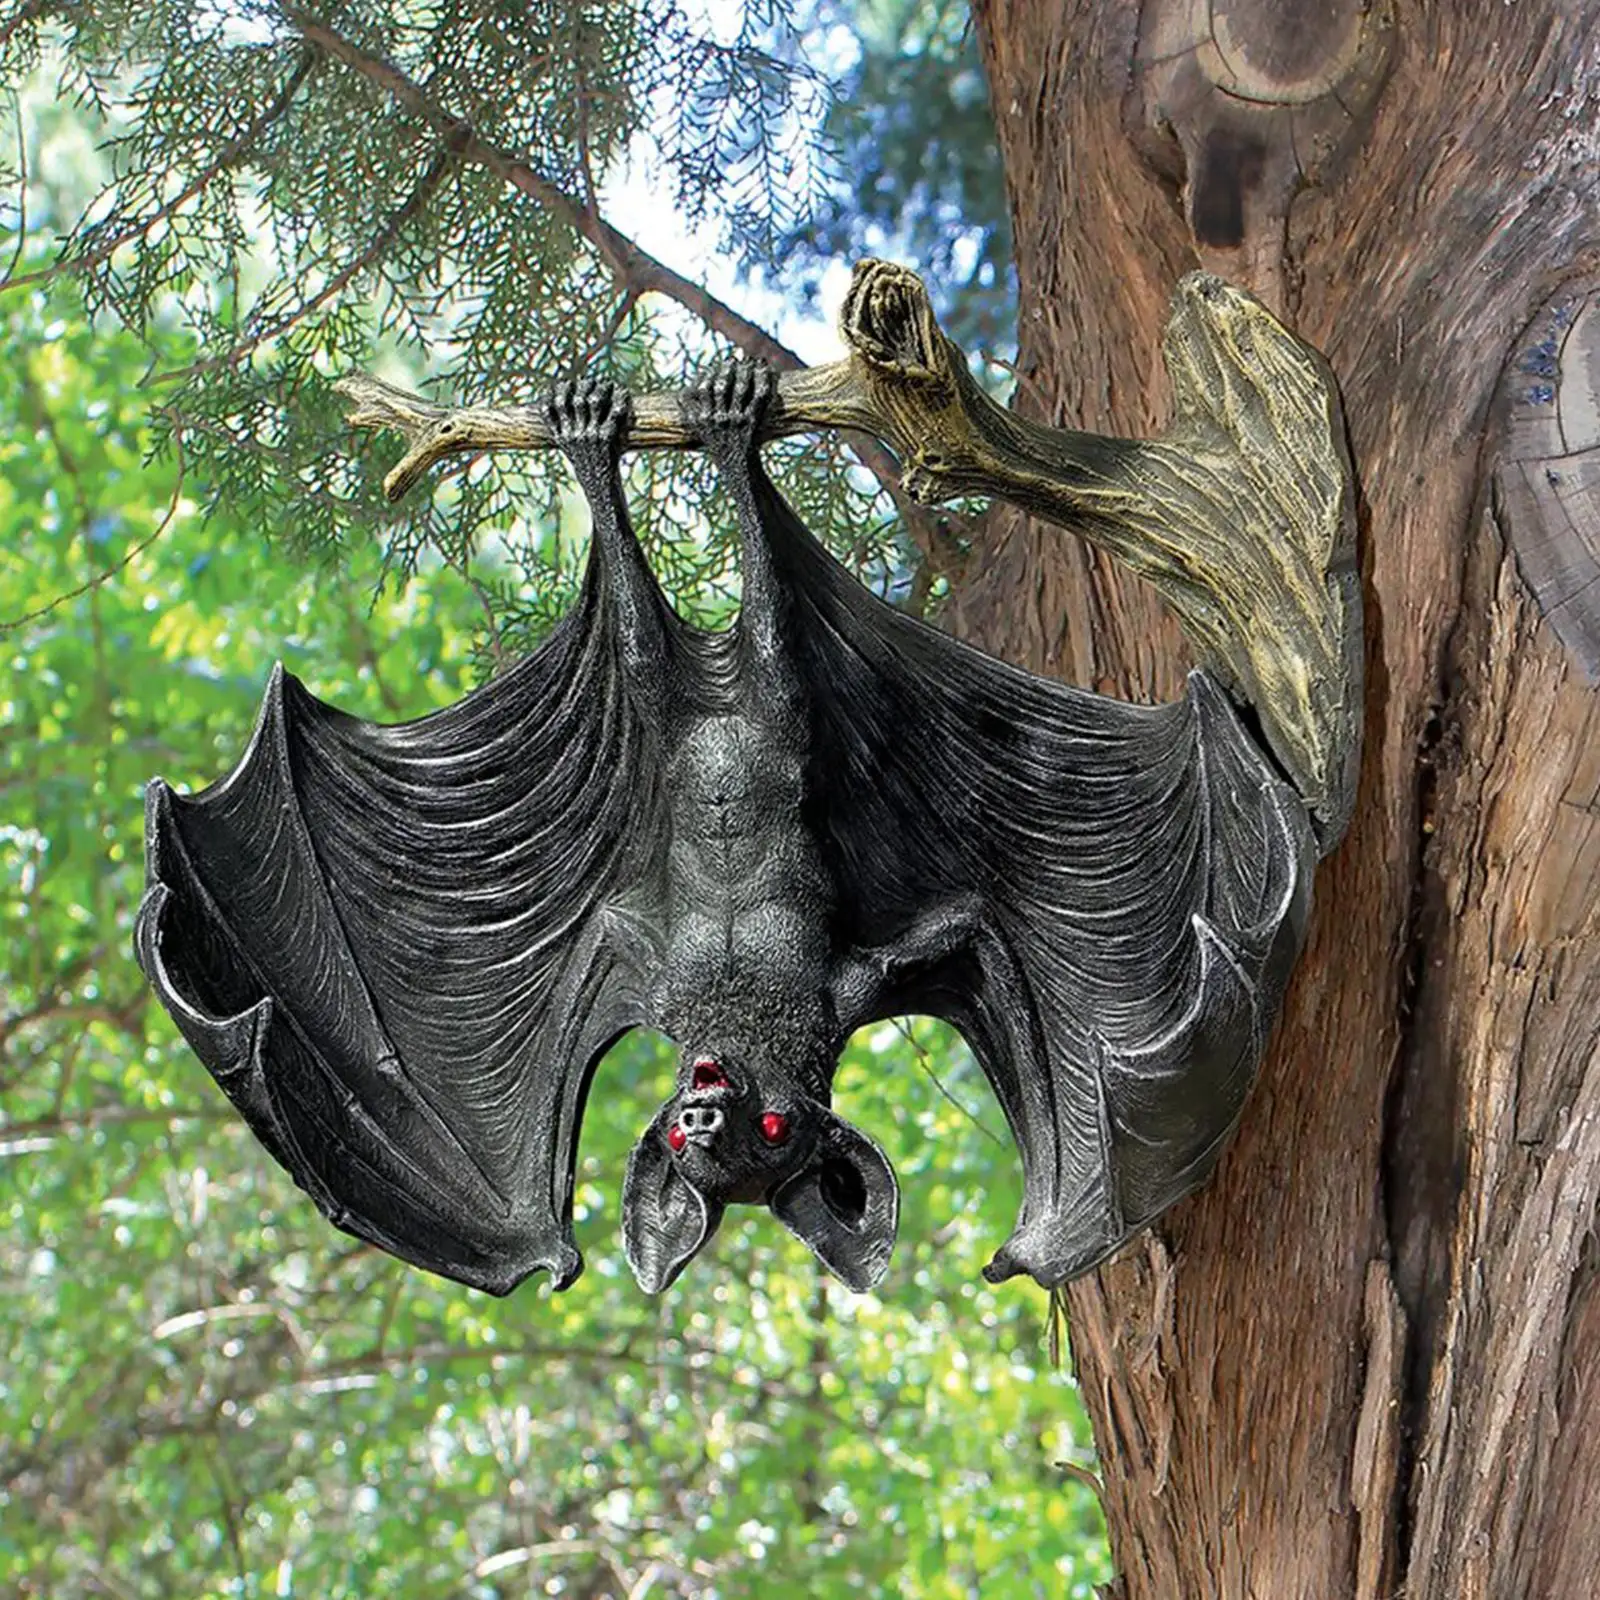 

1PCS High Quality Decorative Pendant Outdoor Cartoon Bat Hanging Decorative Park Crafts Garden Shaped Resin X9V4